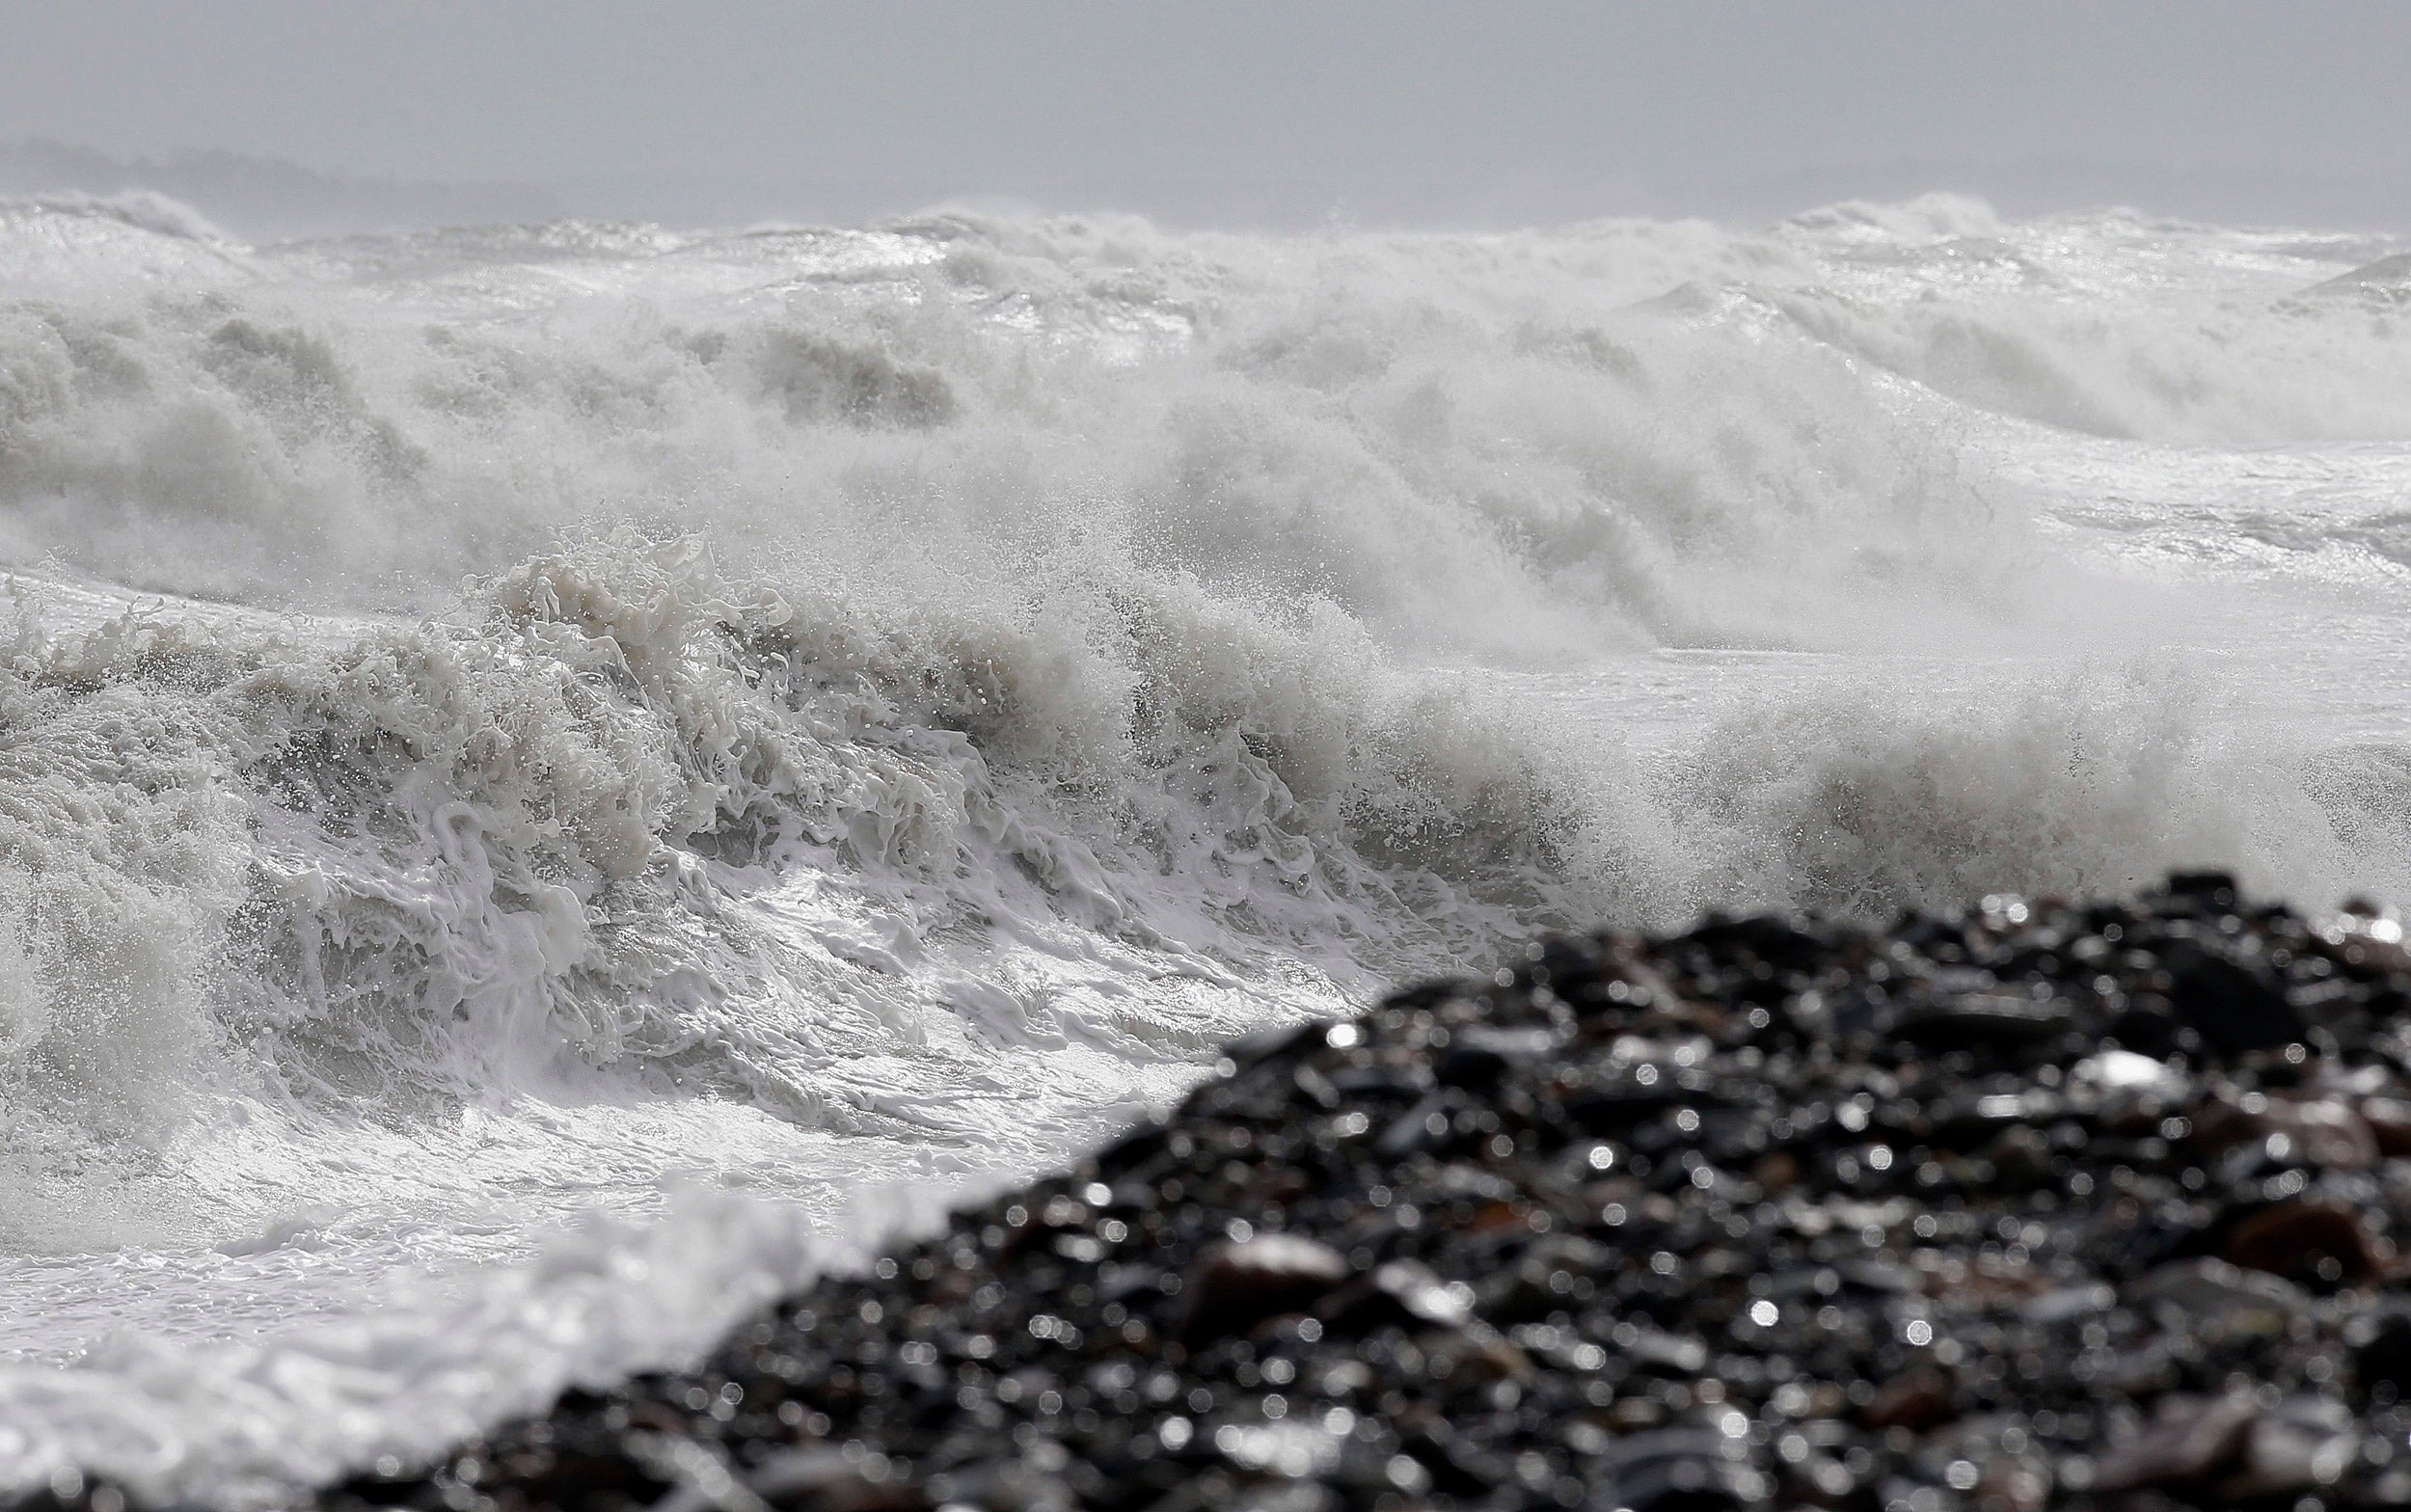 Study Of Sea Level Rise Finds Land Sinking Along East Coast